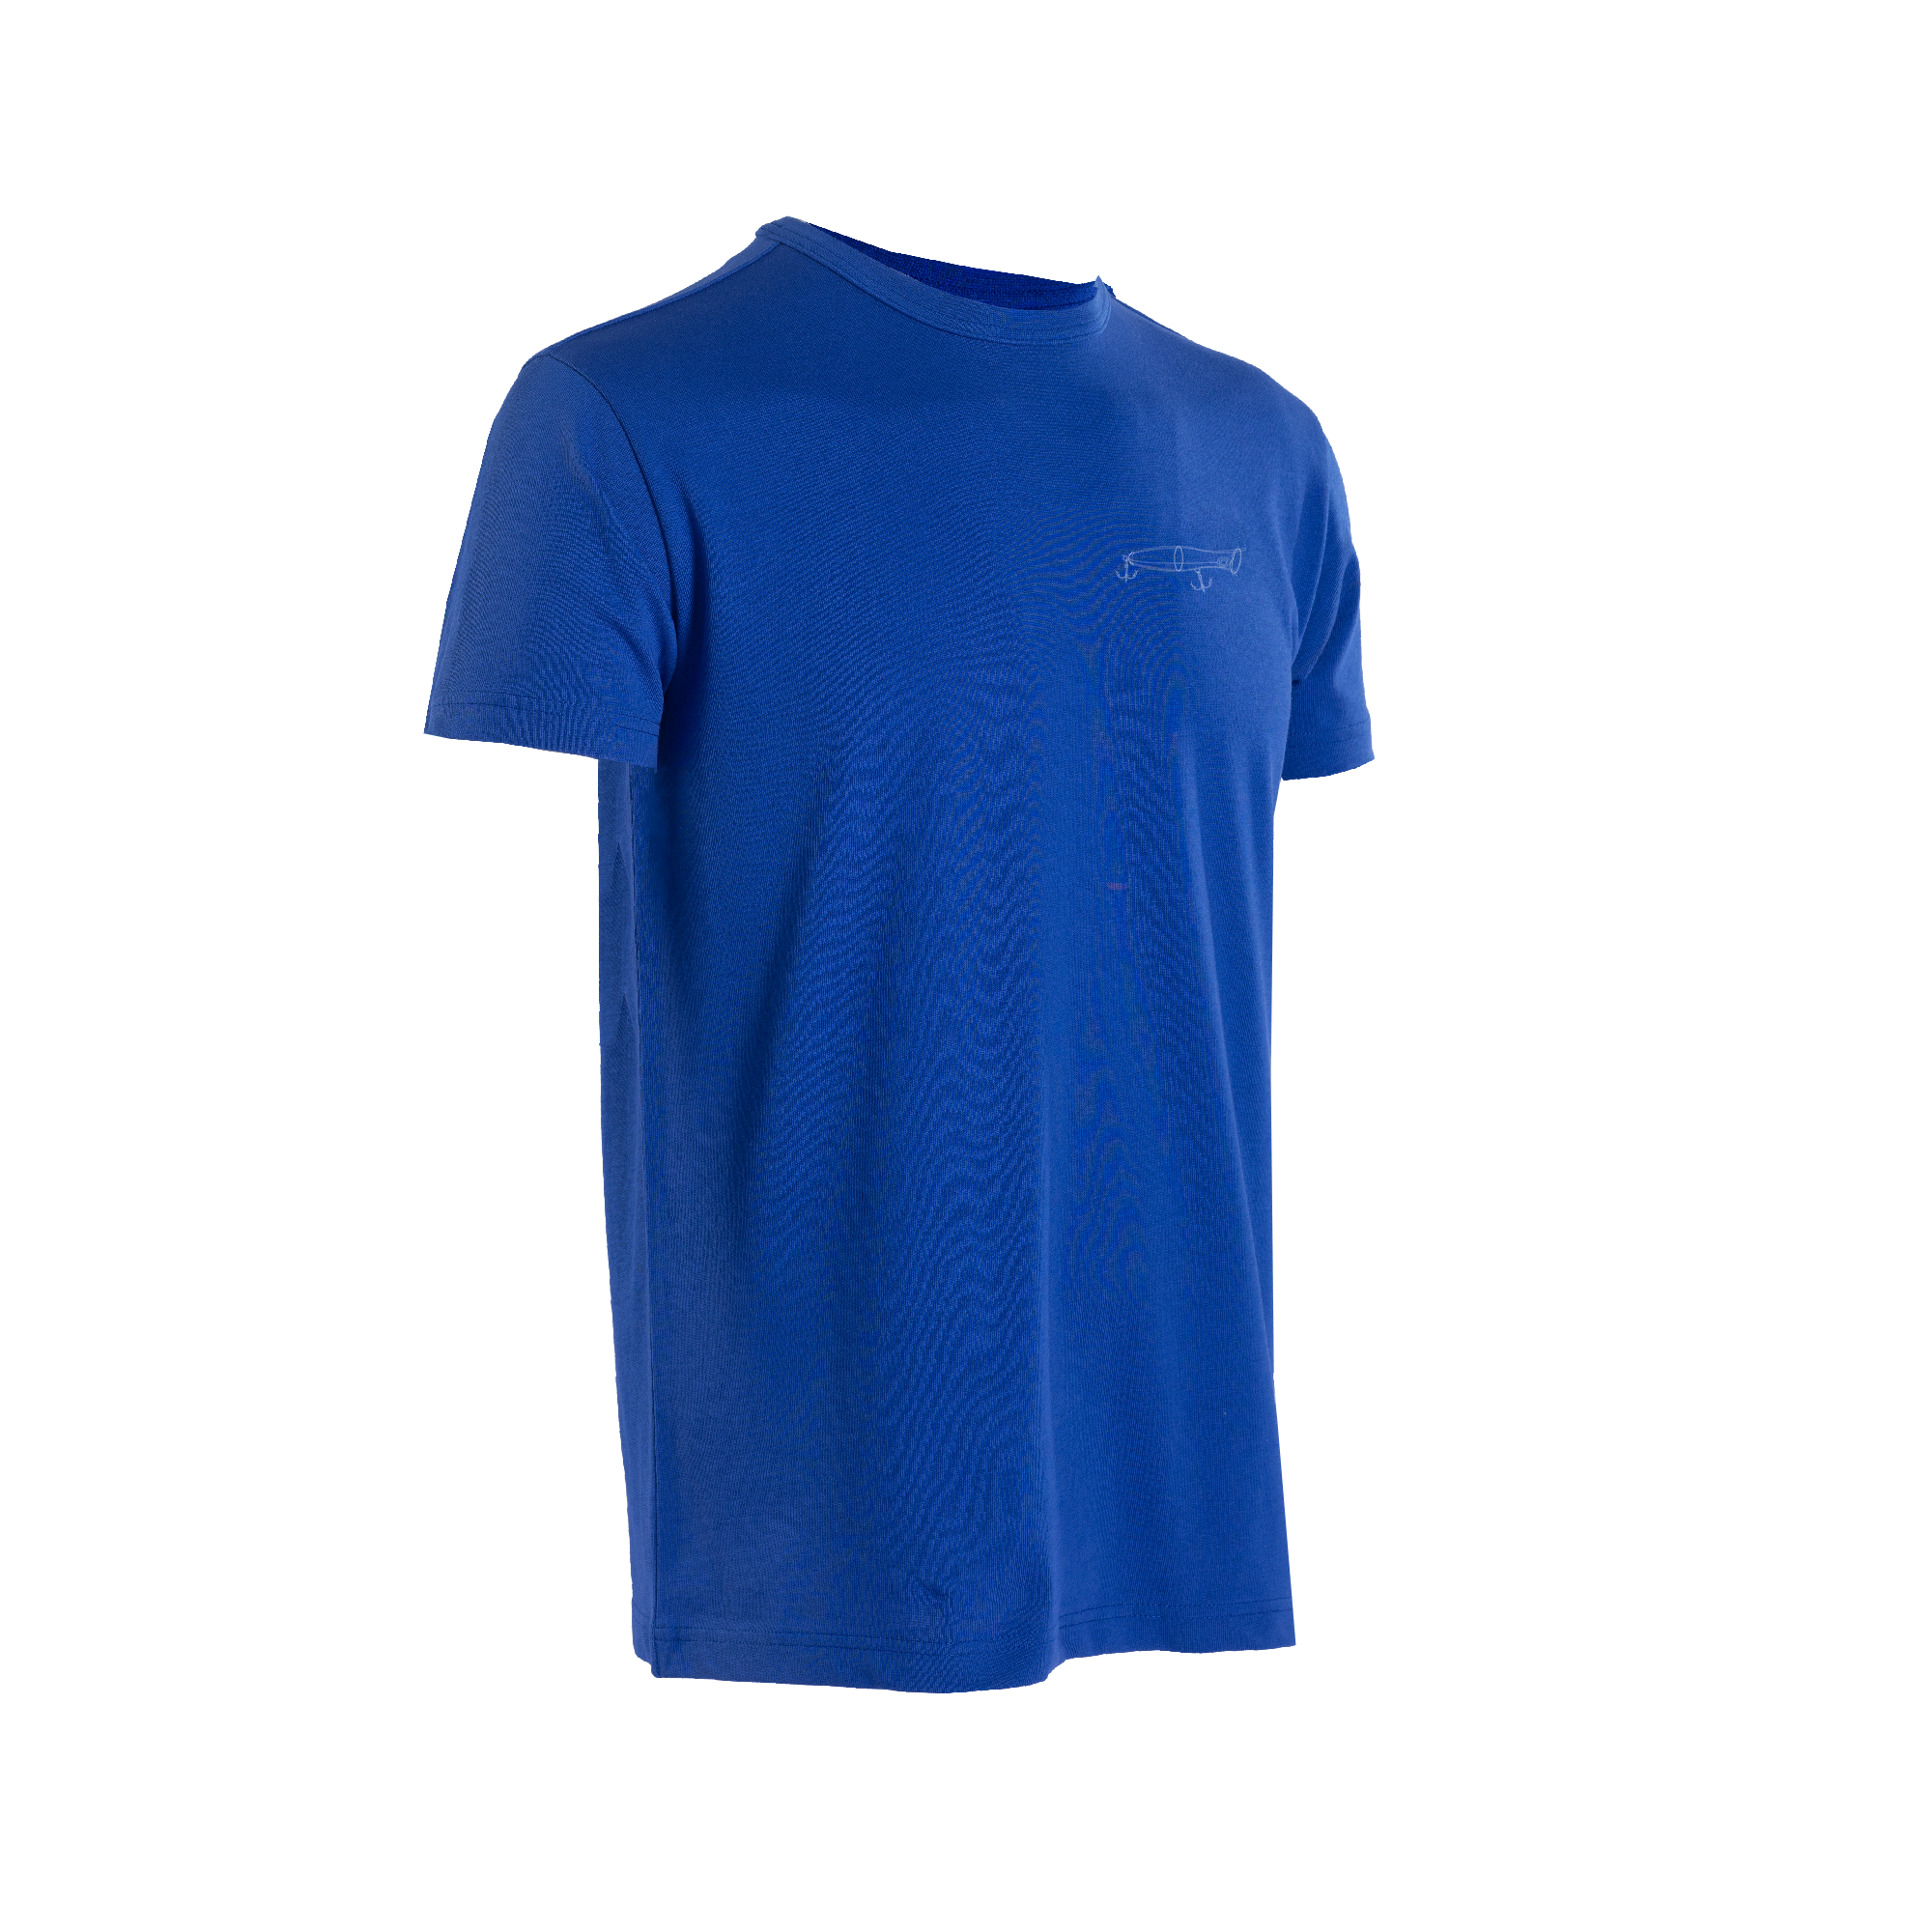 Graphite Short Sleeve Crew Neck T-Shirt Popper Patterned